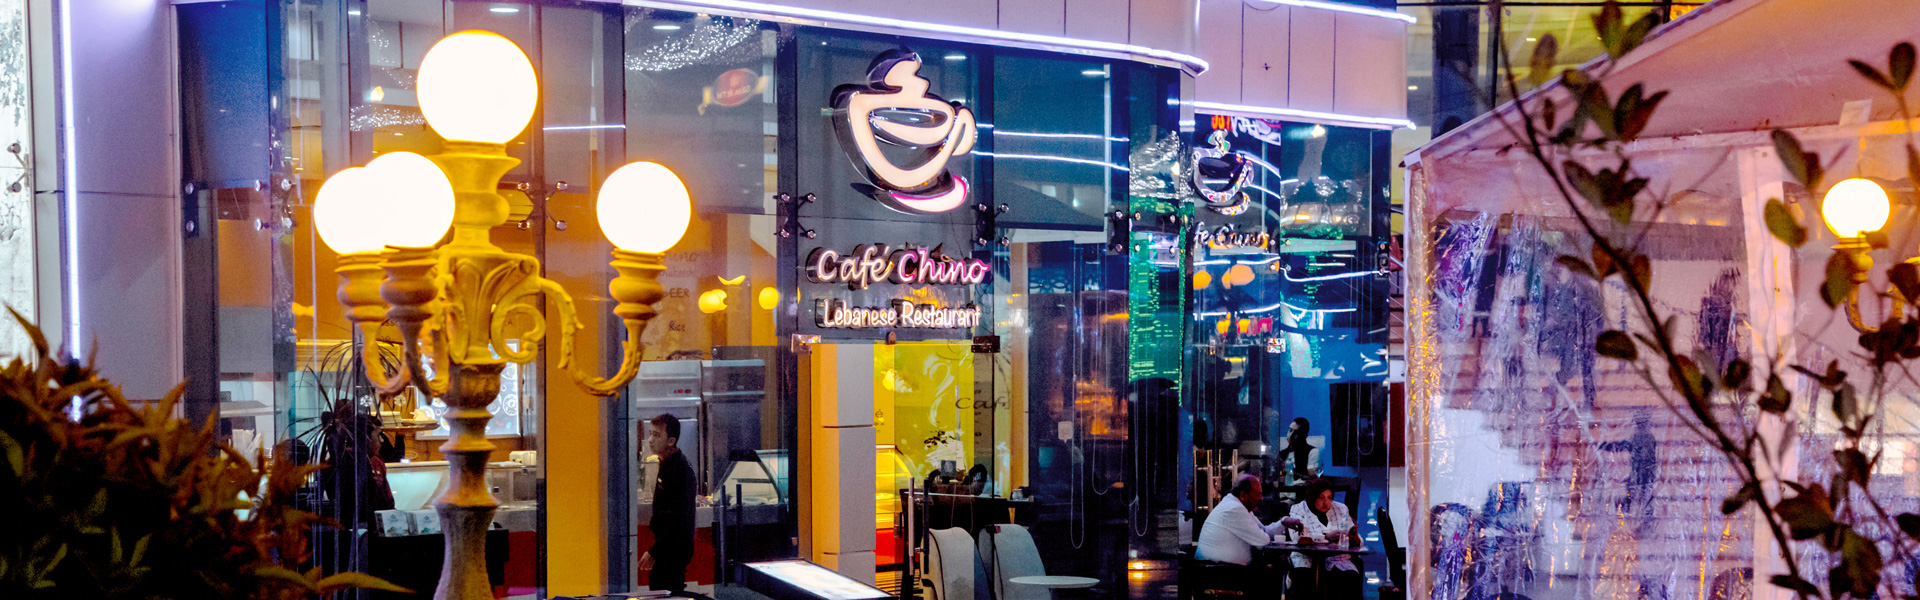 Café Chino